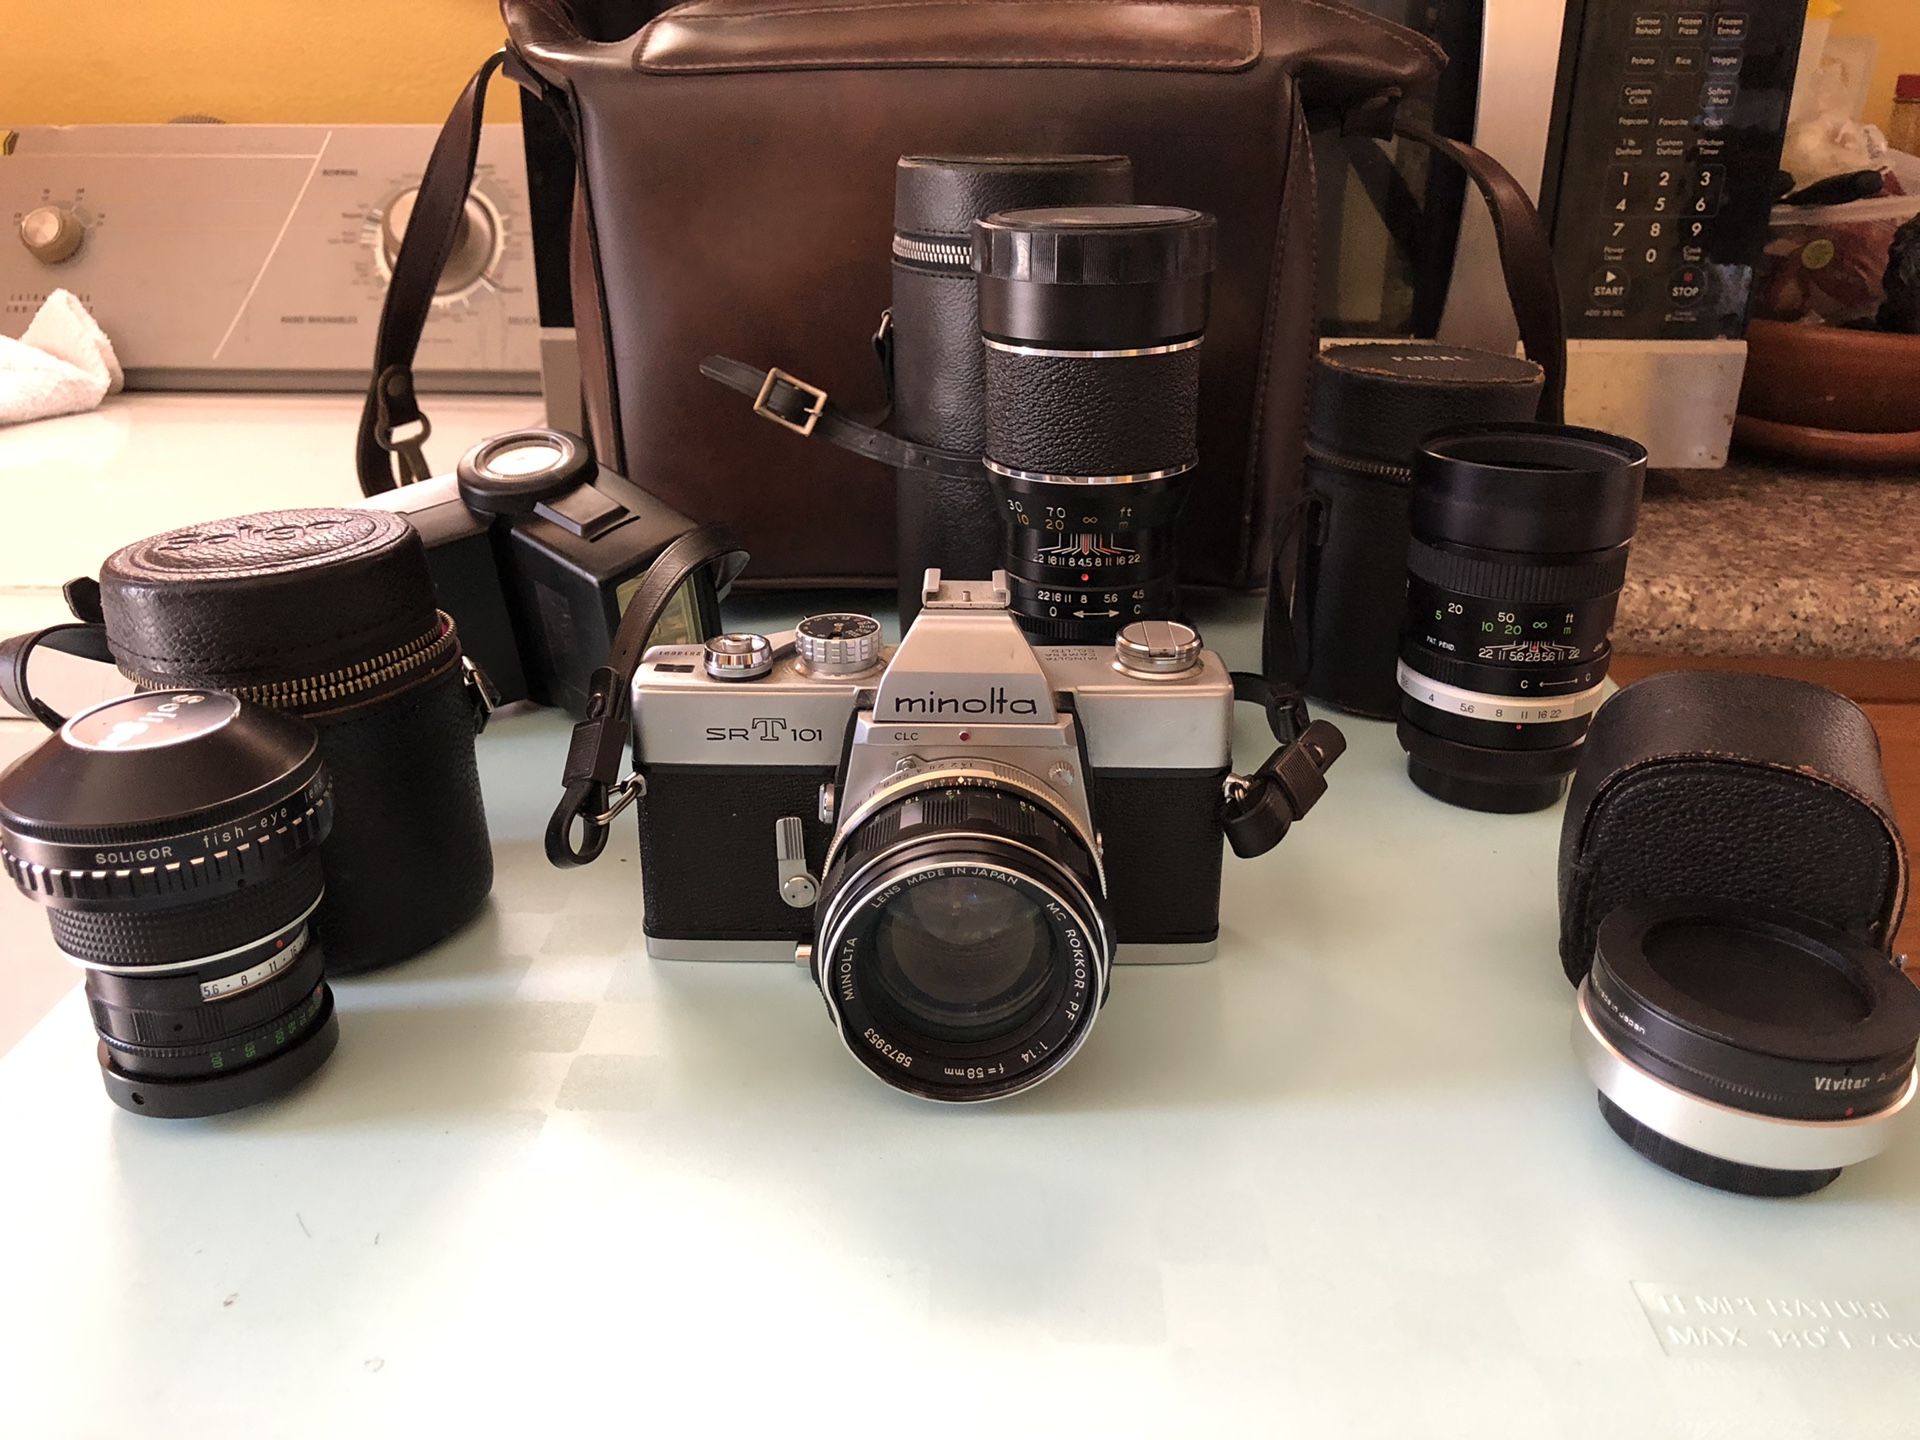 Minolta SRT 101 Vintage Camera 📷 with 5 Lenses, Flash, and Leather Bag